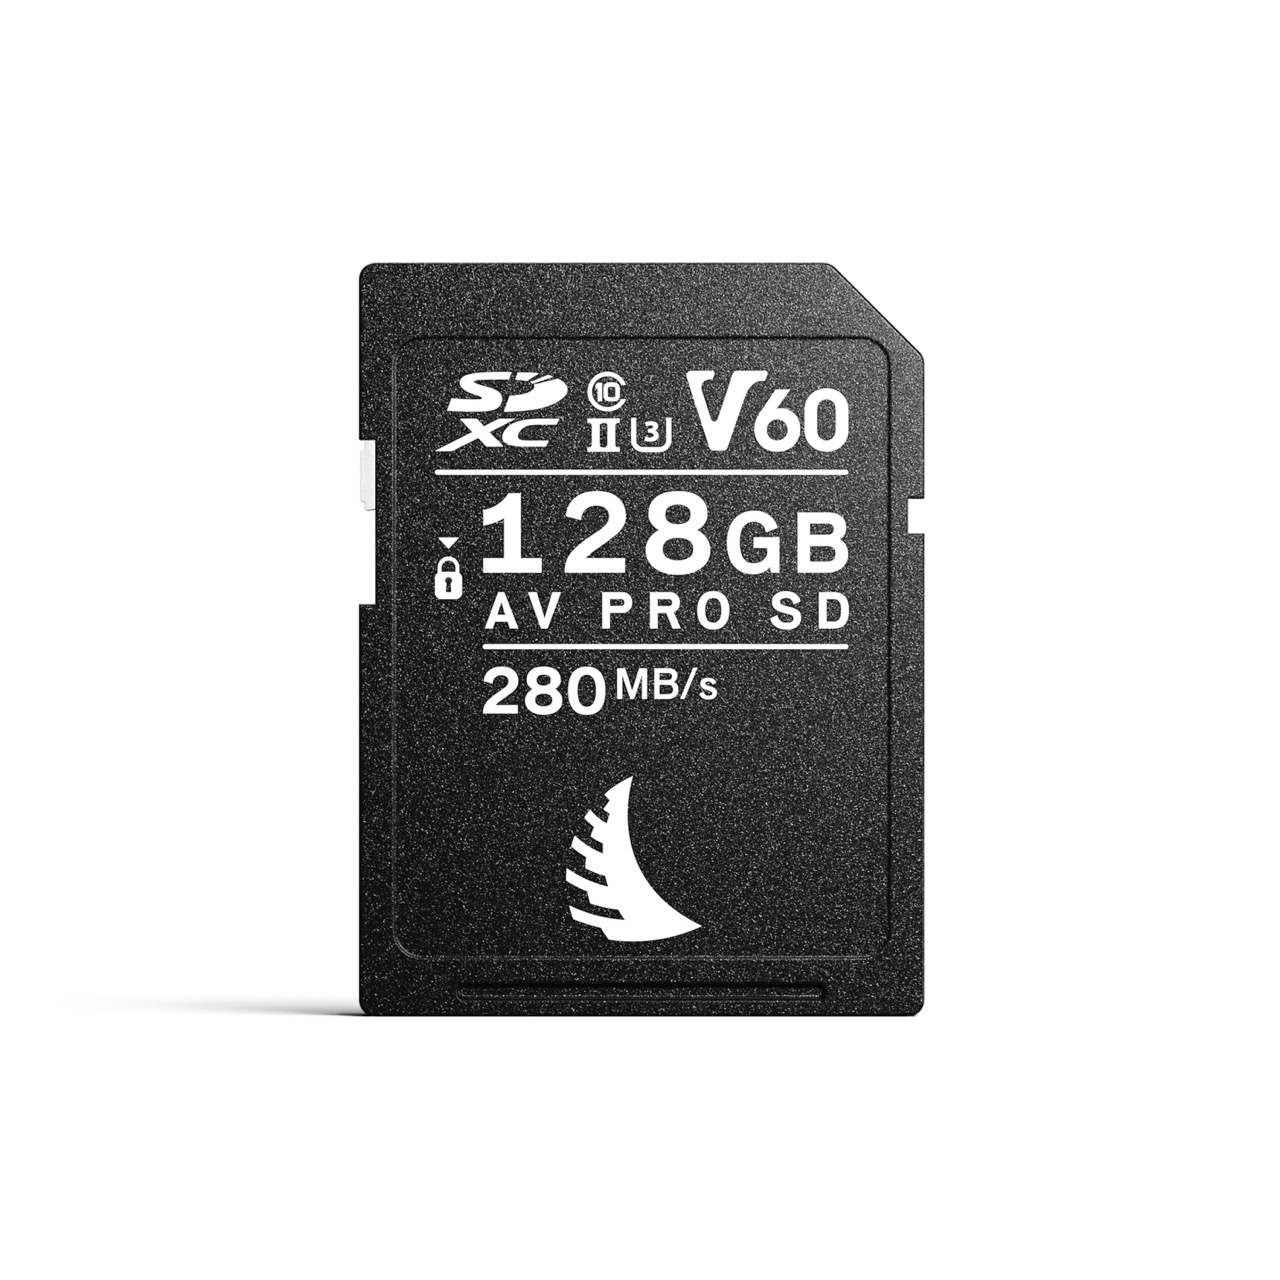 Angelbird AV PRO SD V60 MK2 128GB Speicherkarte, Frontal